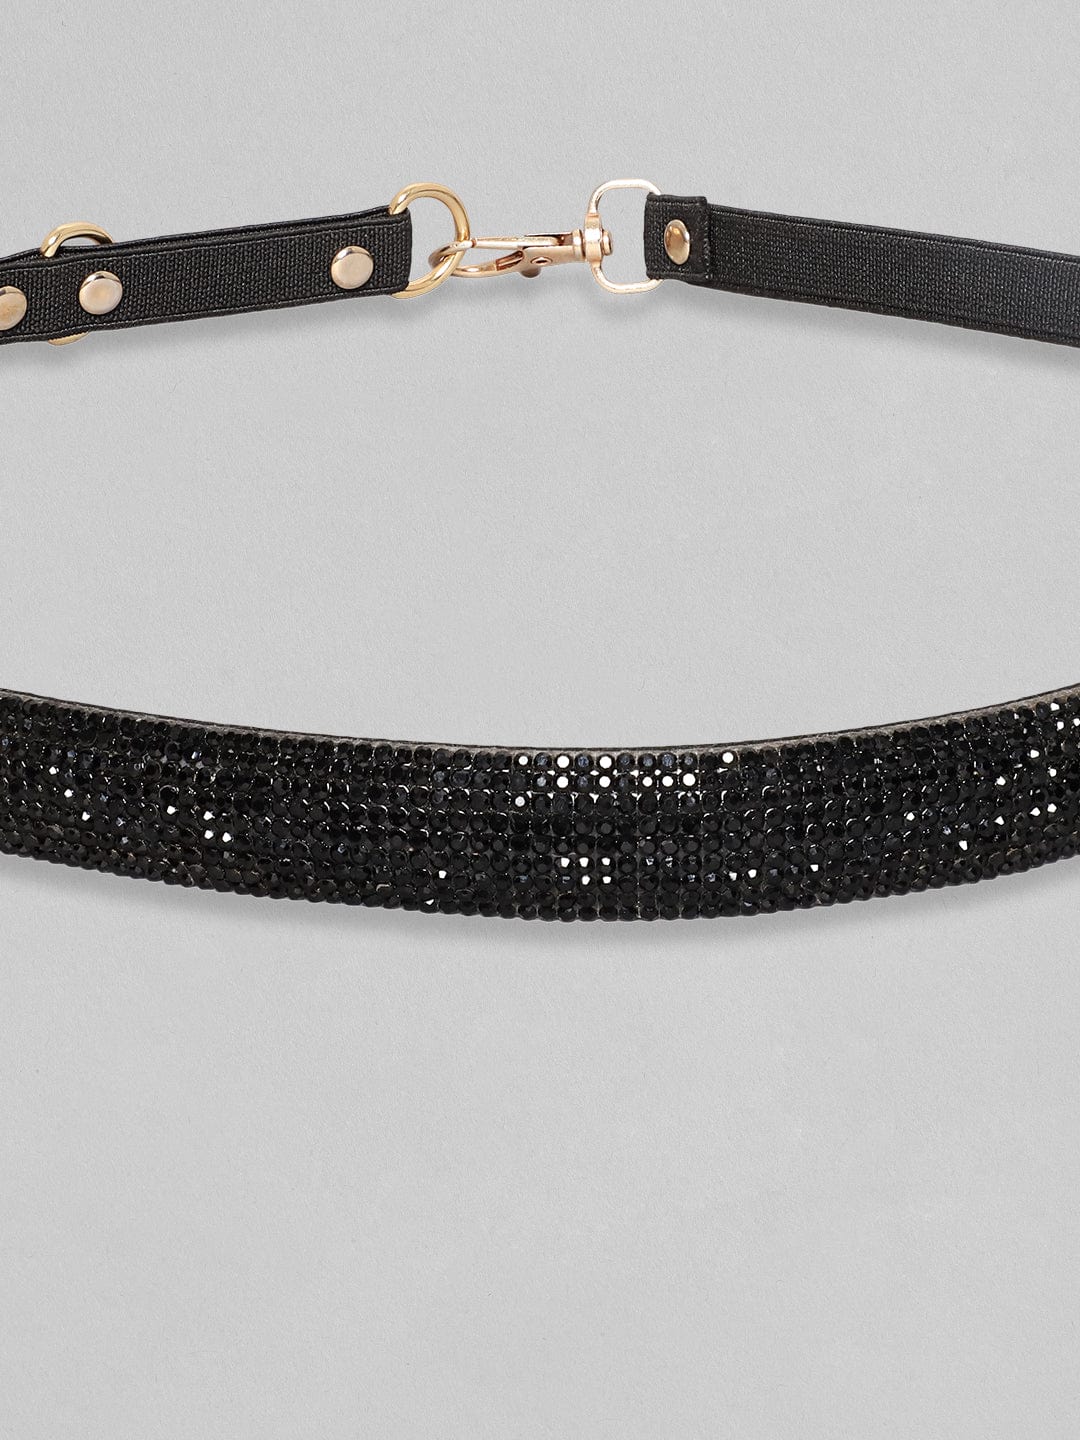 Rubans Black Crystal Studded Adjustable Fabric Belt. Belt